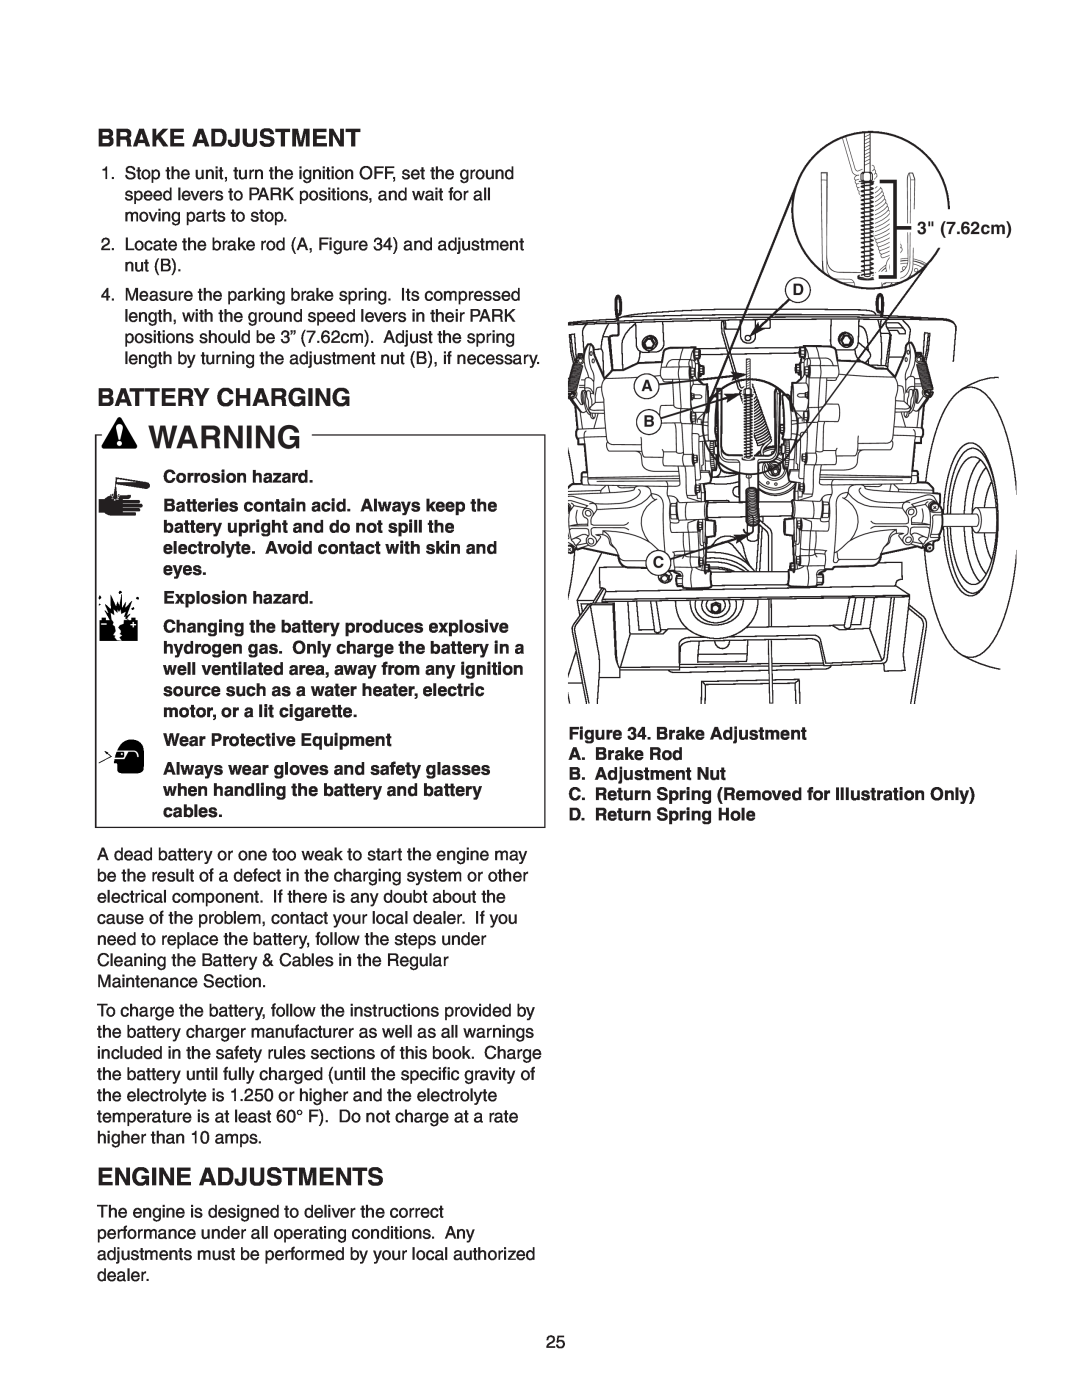 Snapper 150Z ZTR Series manual Brake Adjustment, Battery Charging, Engine Adjustments, Corrosion hazard, Explosion hazard 